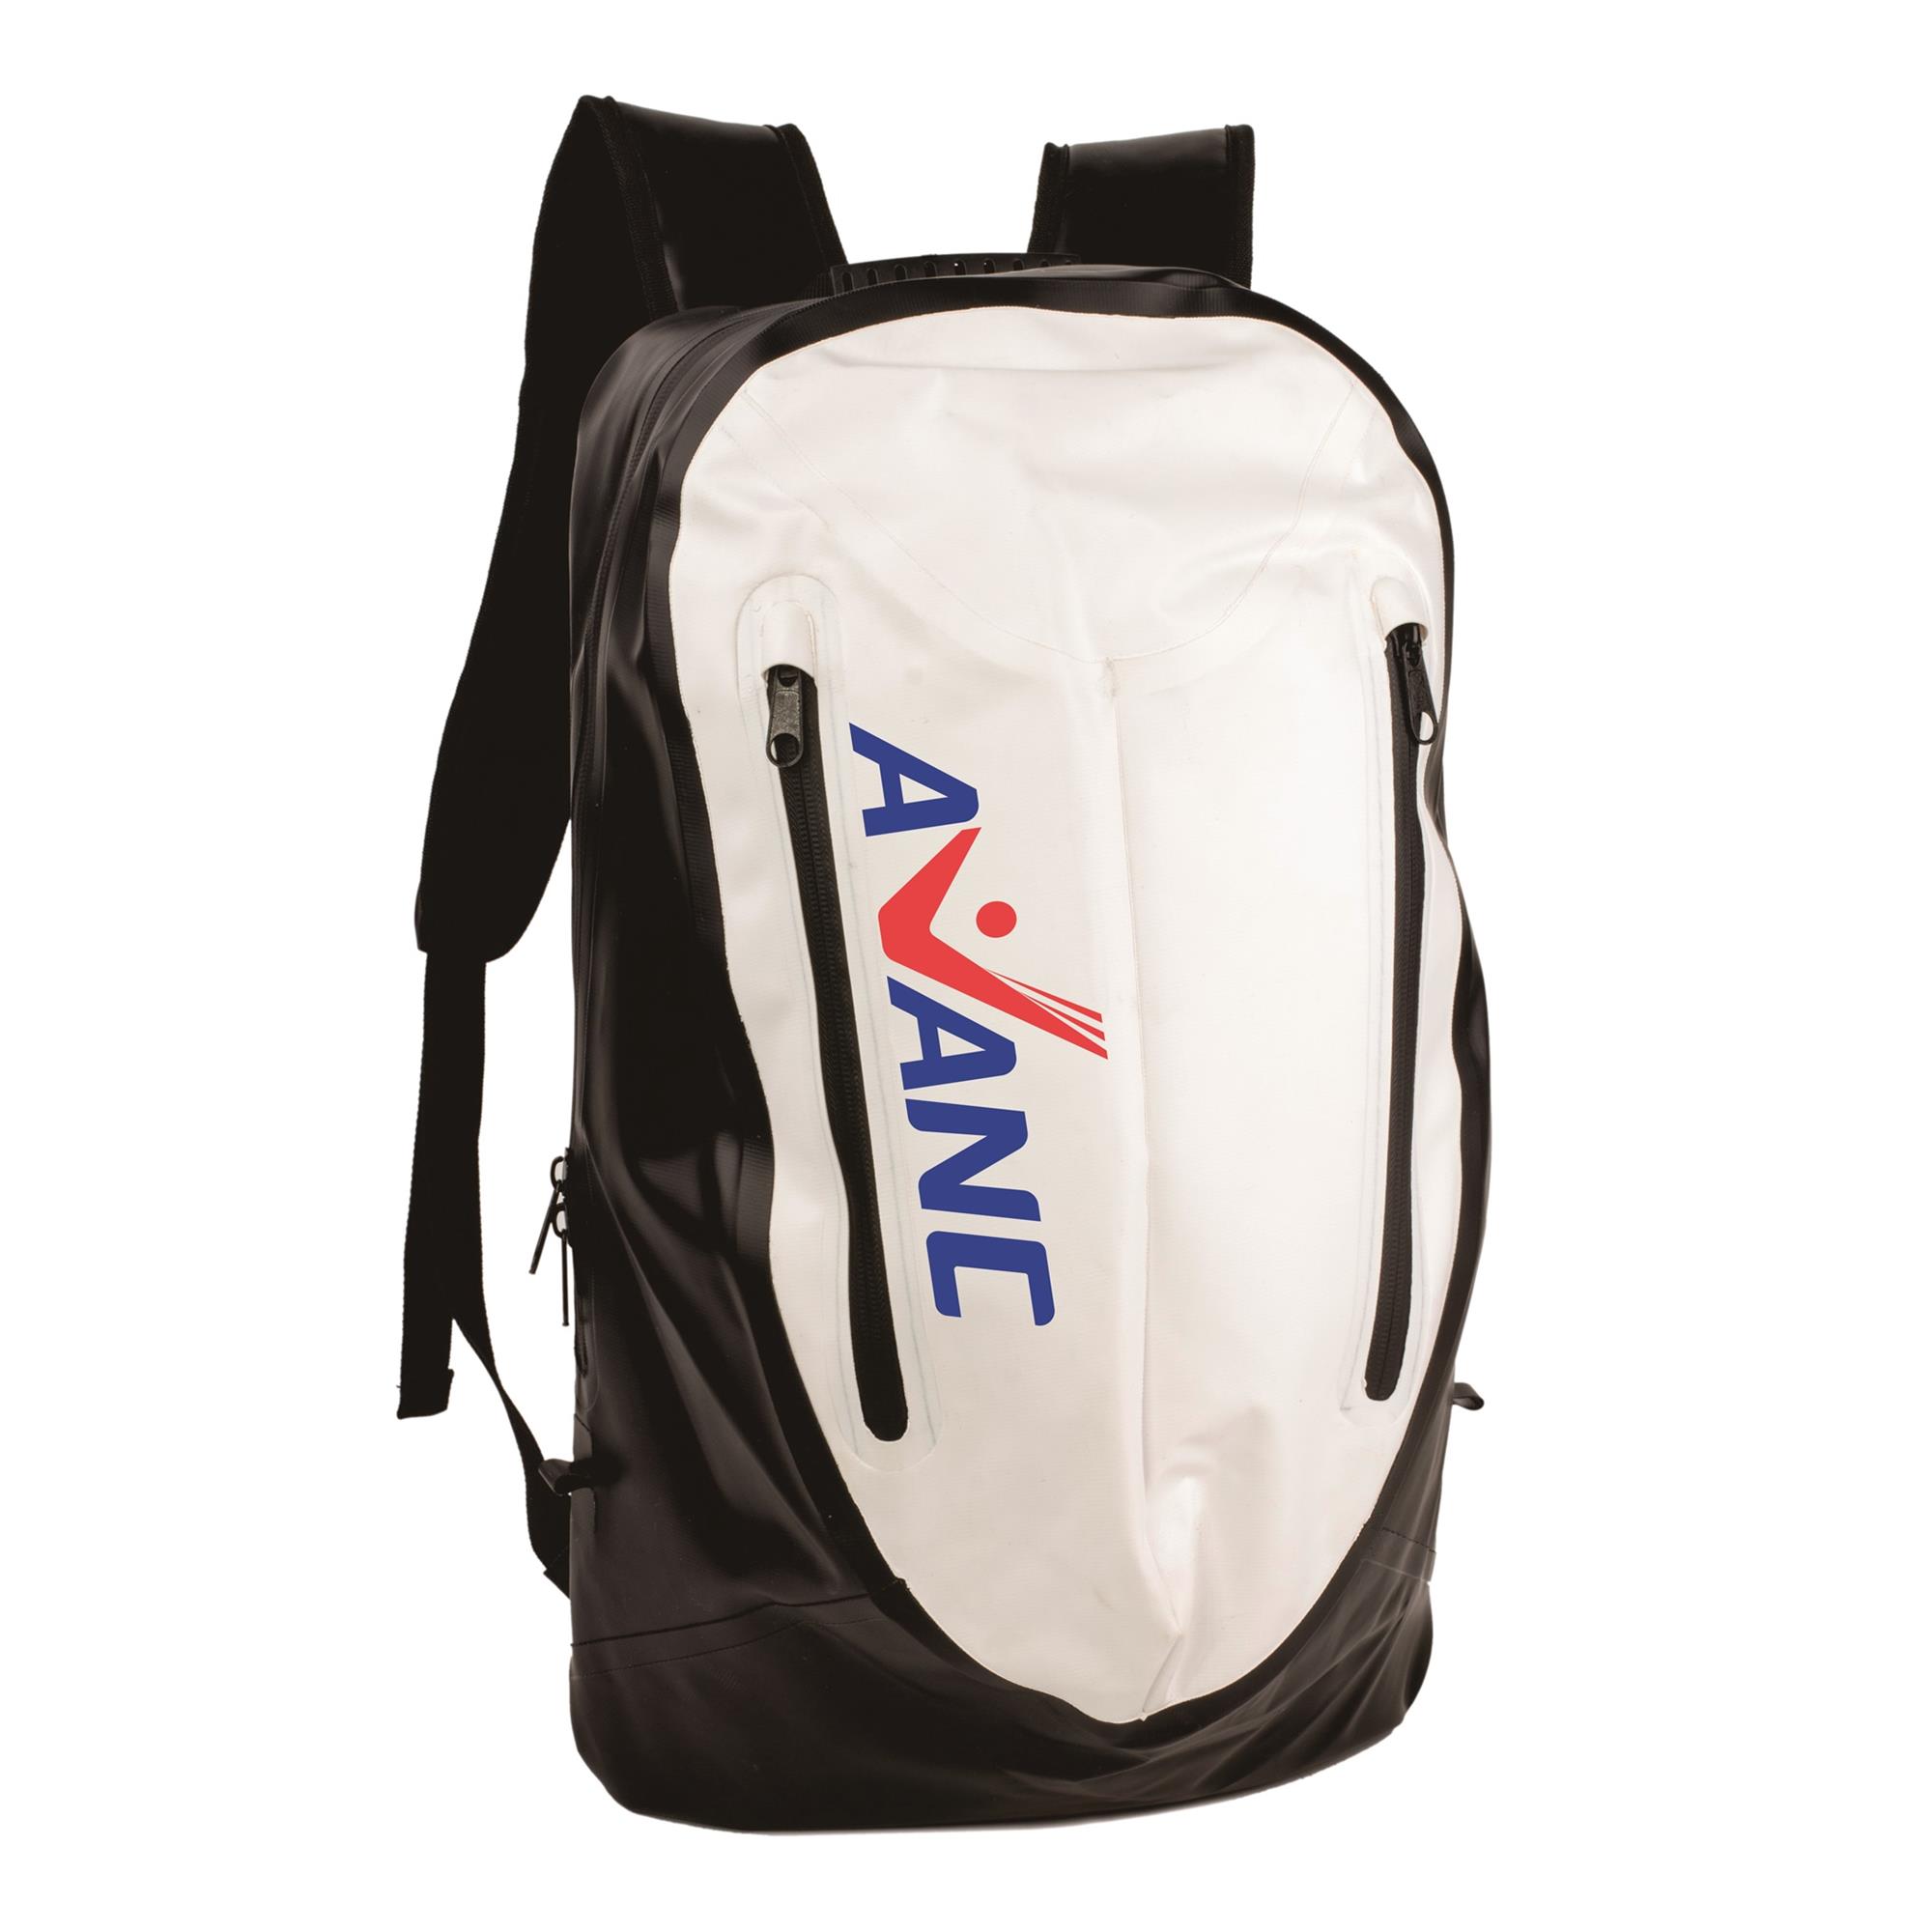 Fashion Sports bag, Backpack With Zipper Closure 30L